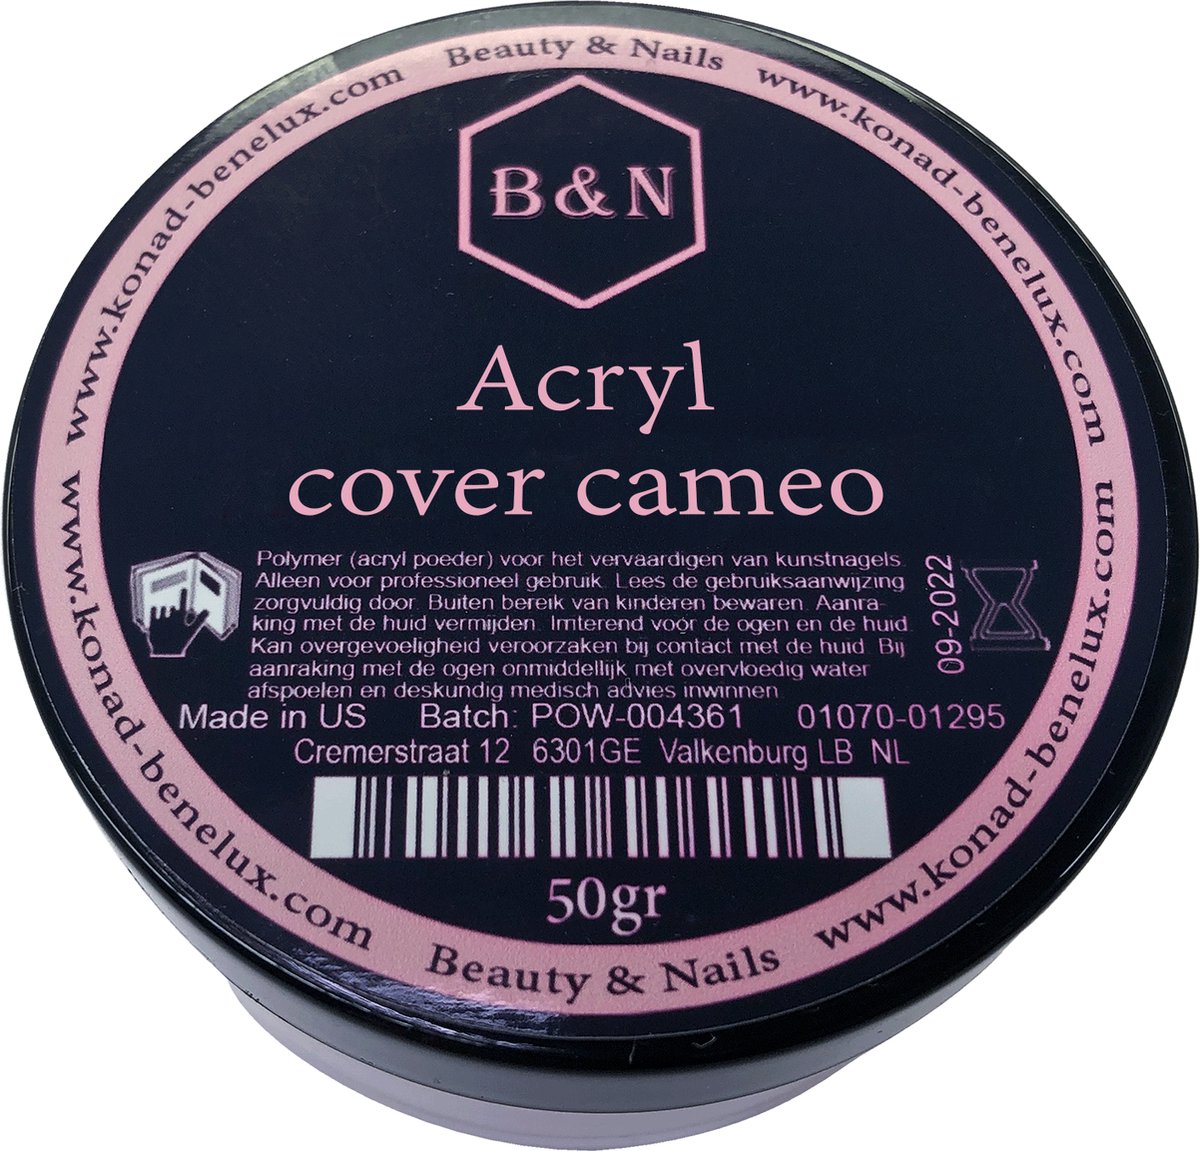 Acryl - cover cameo - 50 gr | B&N - acrylpoeder - VEGAN - acrylpoeder